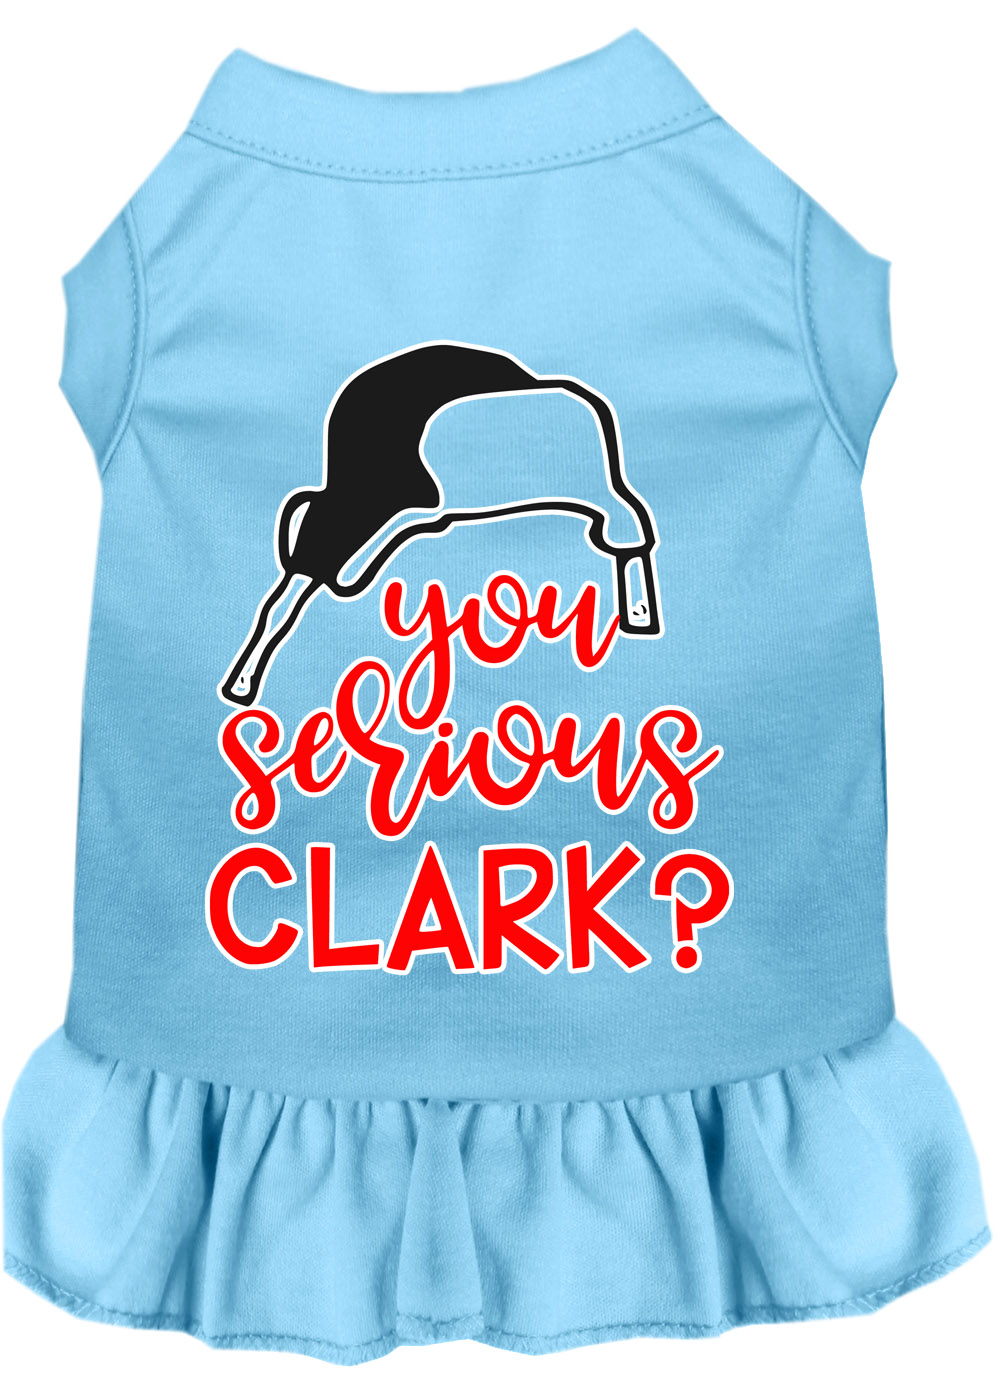 You Serious Clark? Screen Print Dog Dress Baby Blue XXXL